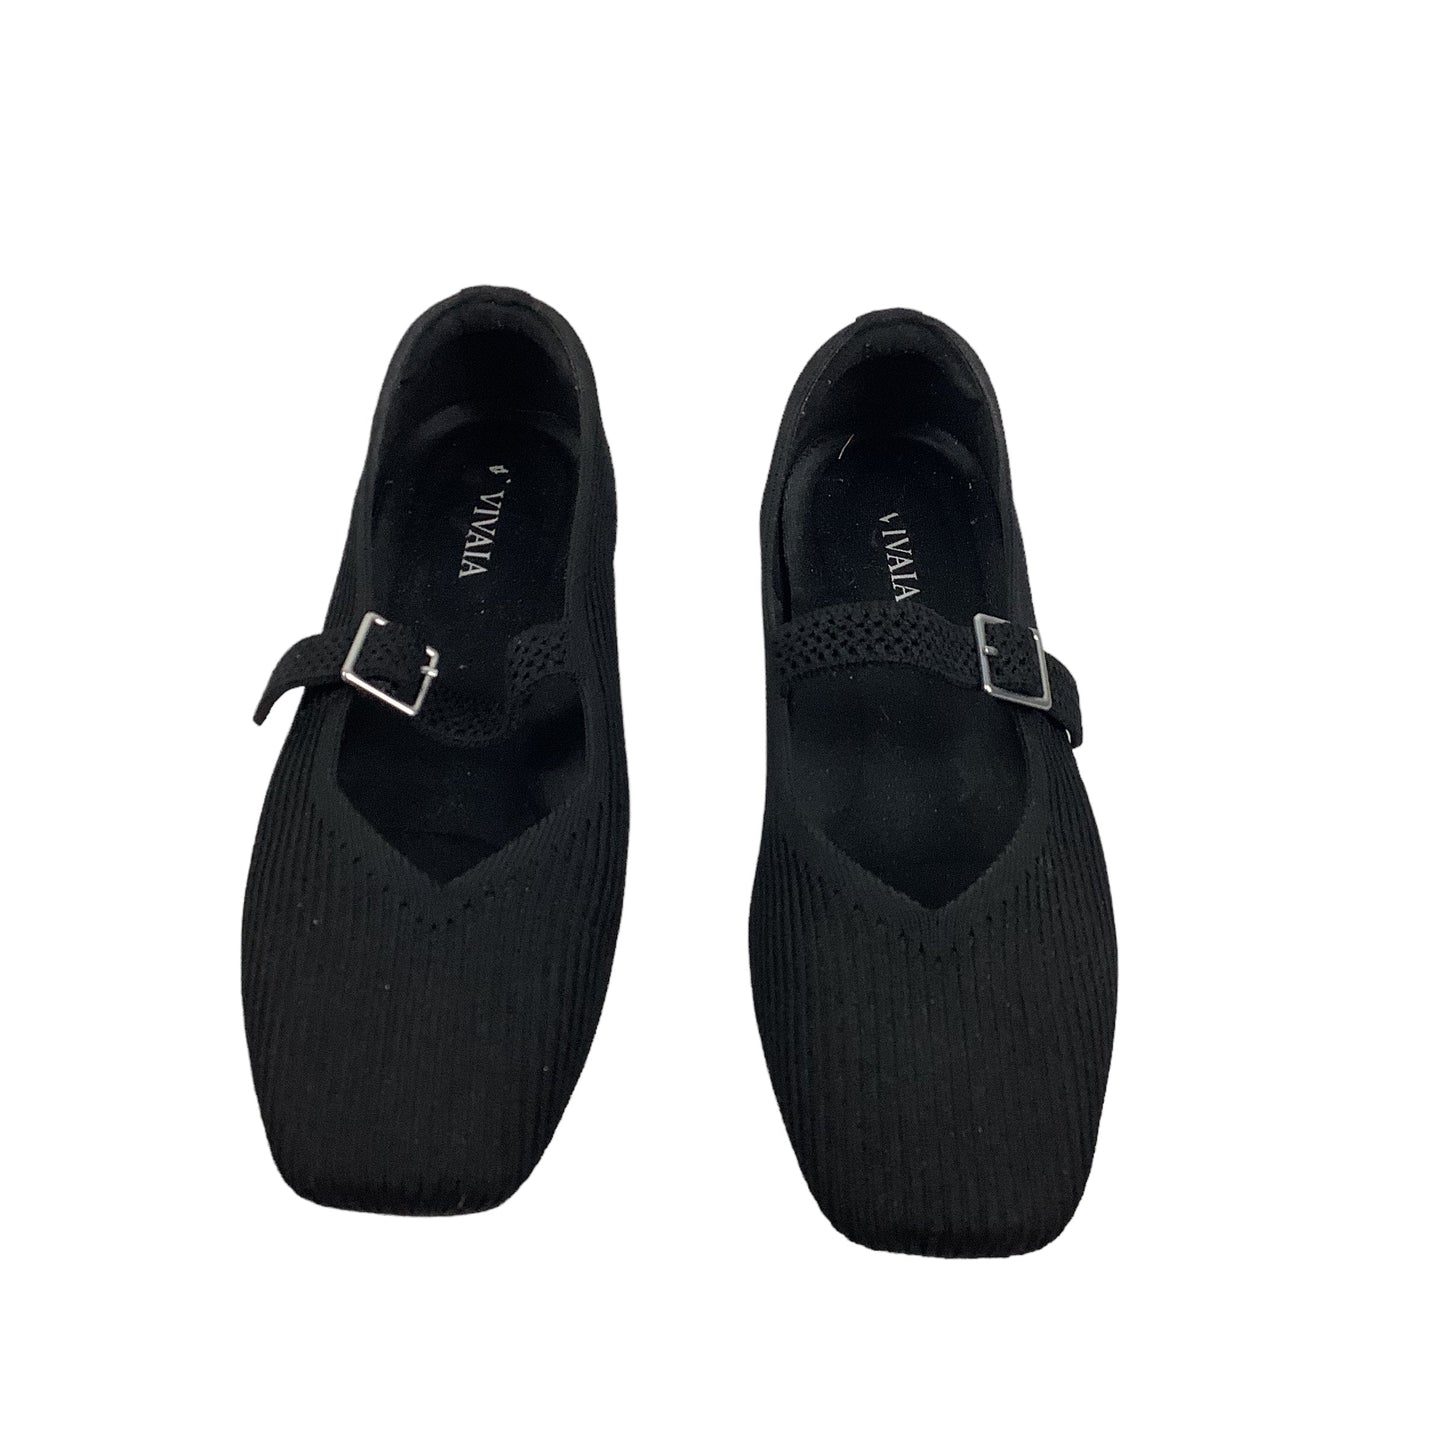 Black Shoes Flats Clothes Mentor, Size 6.5